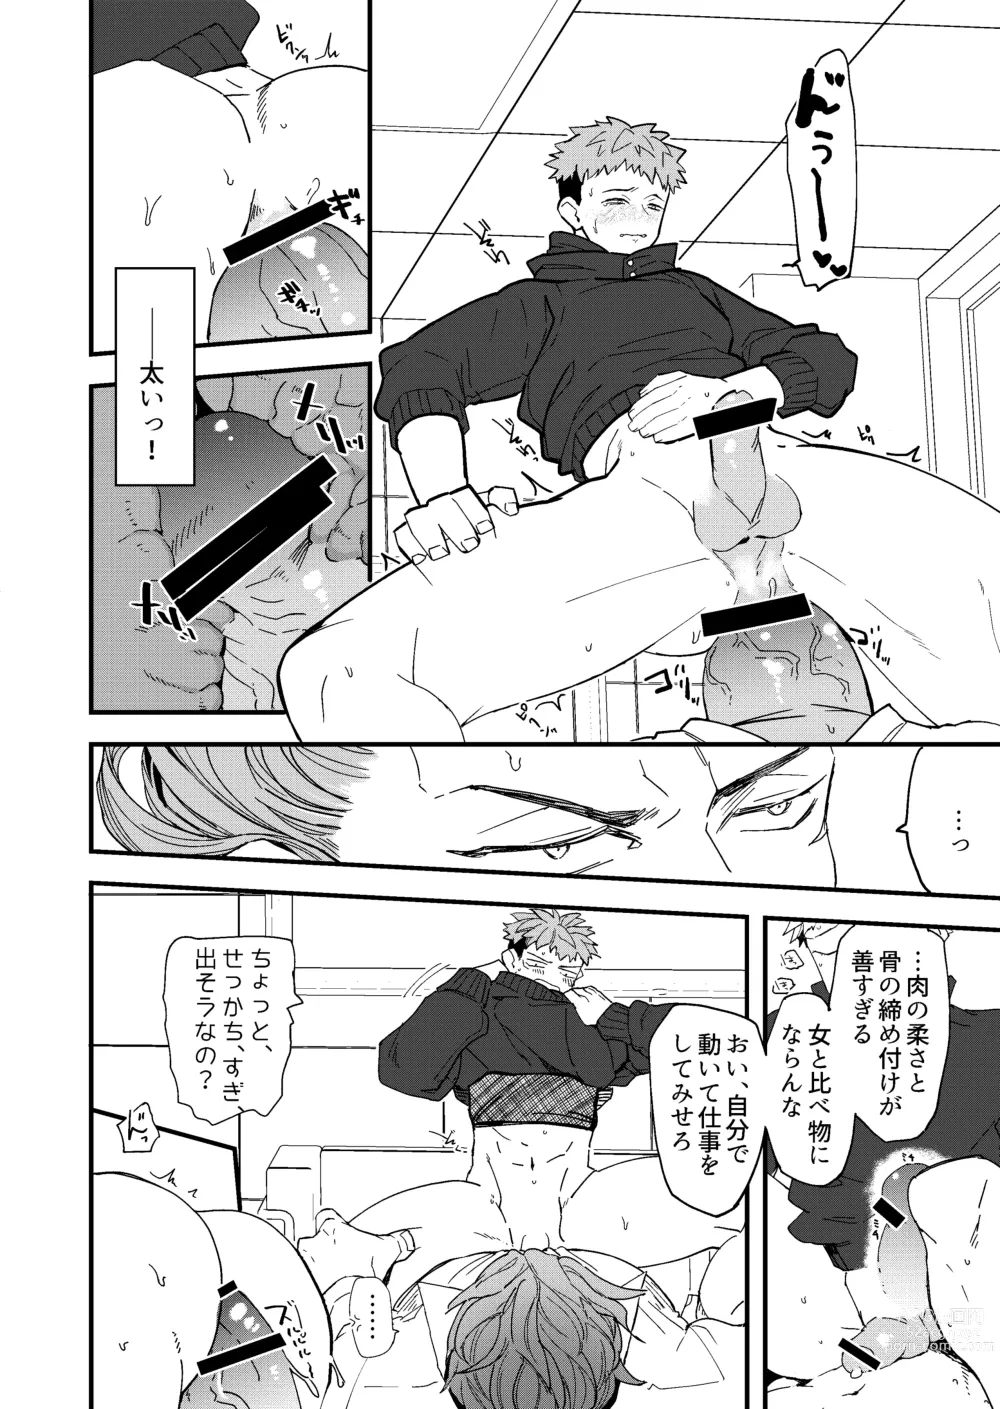 Page 15 of doujinshi Kanzen haiboku